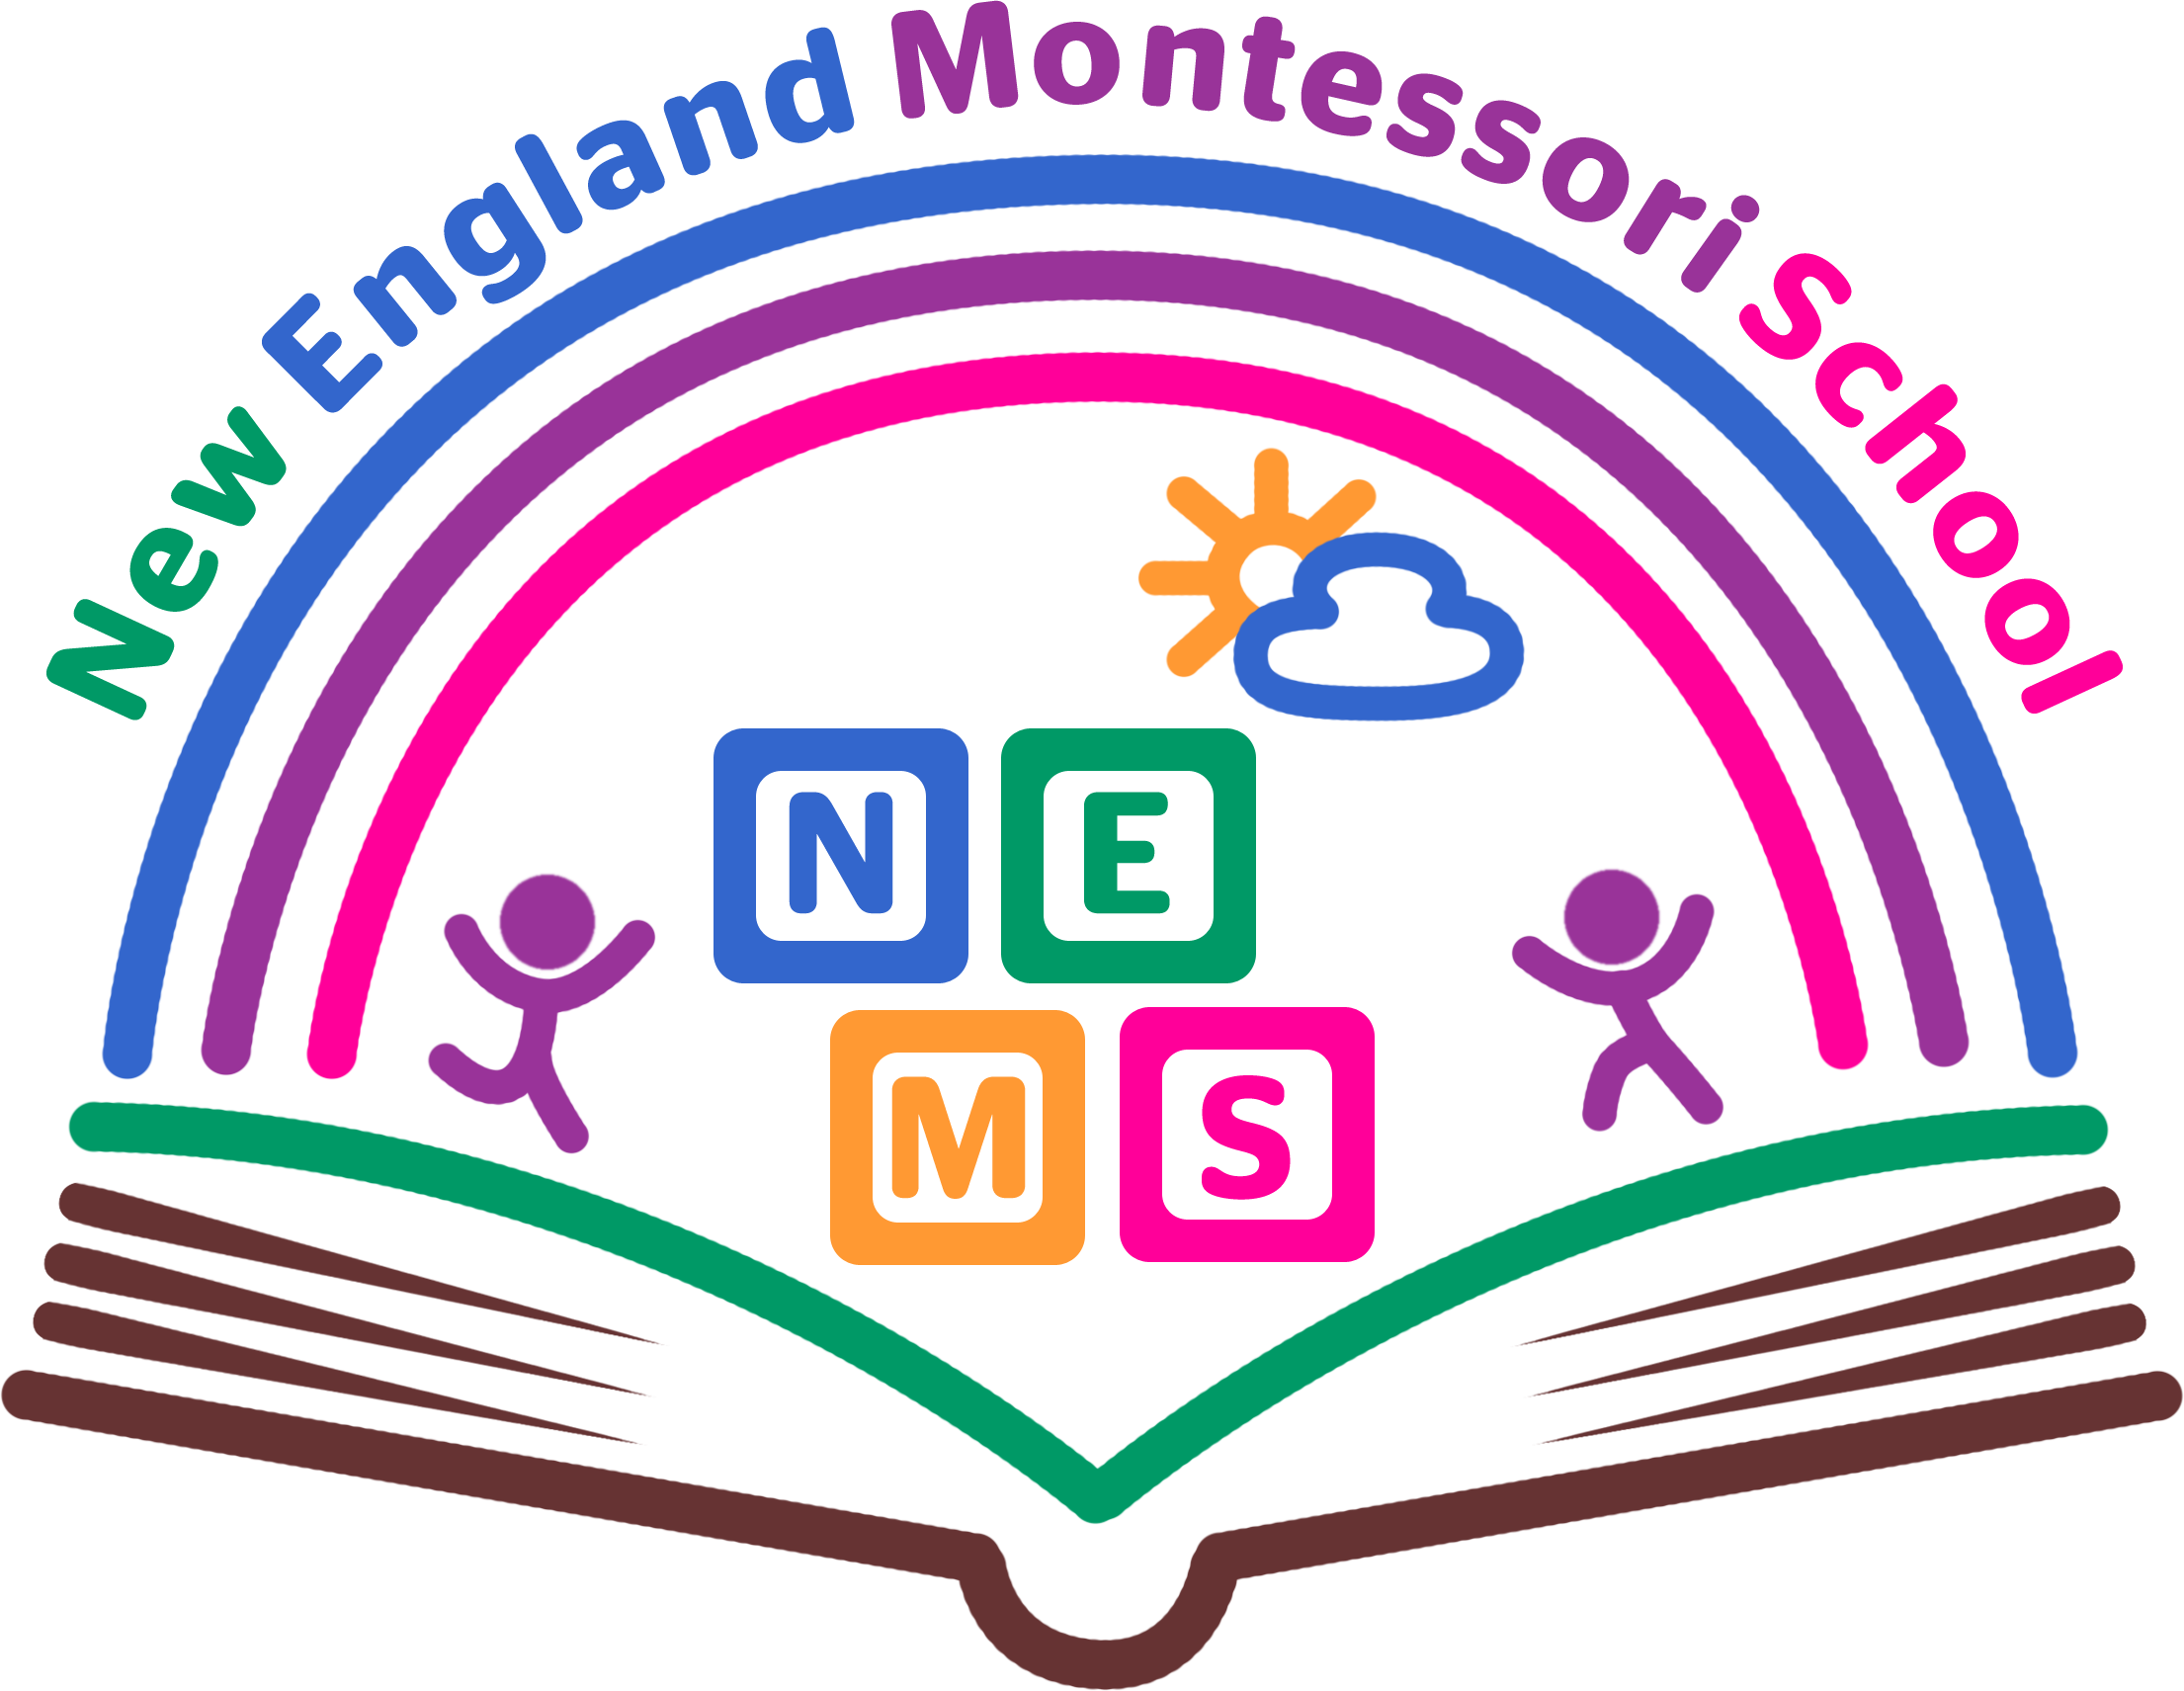 New England Montessori School